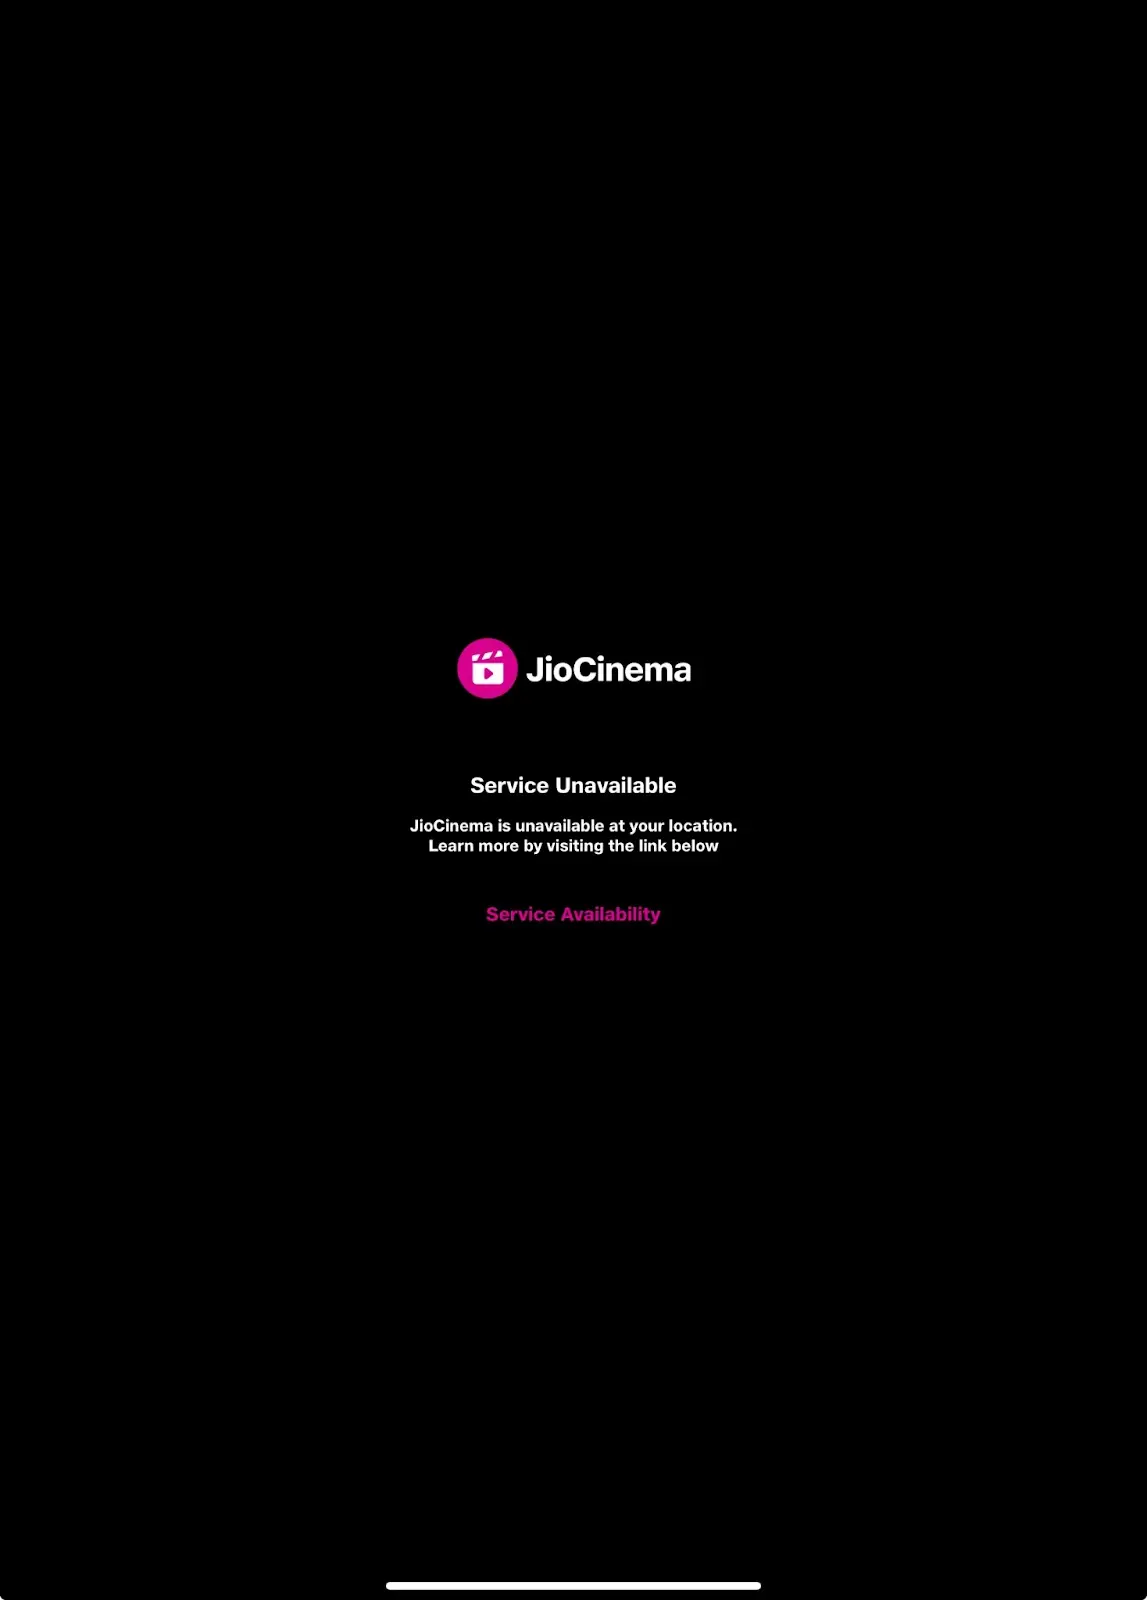 'Service unavailable' error message on JioCinema 